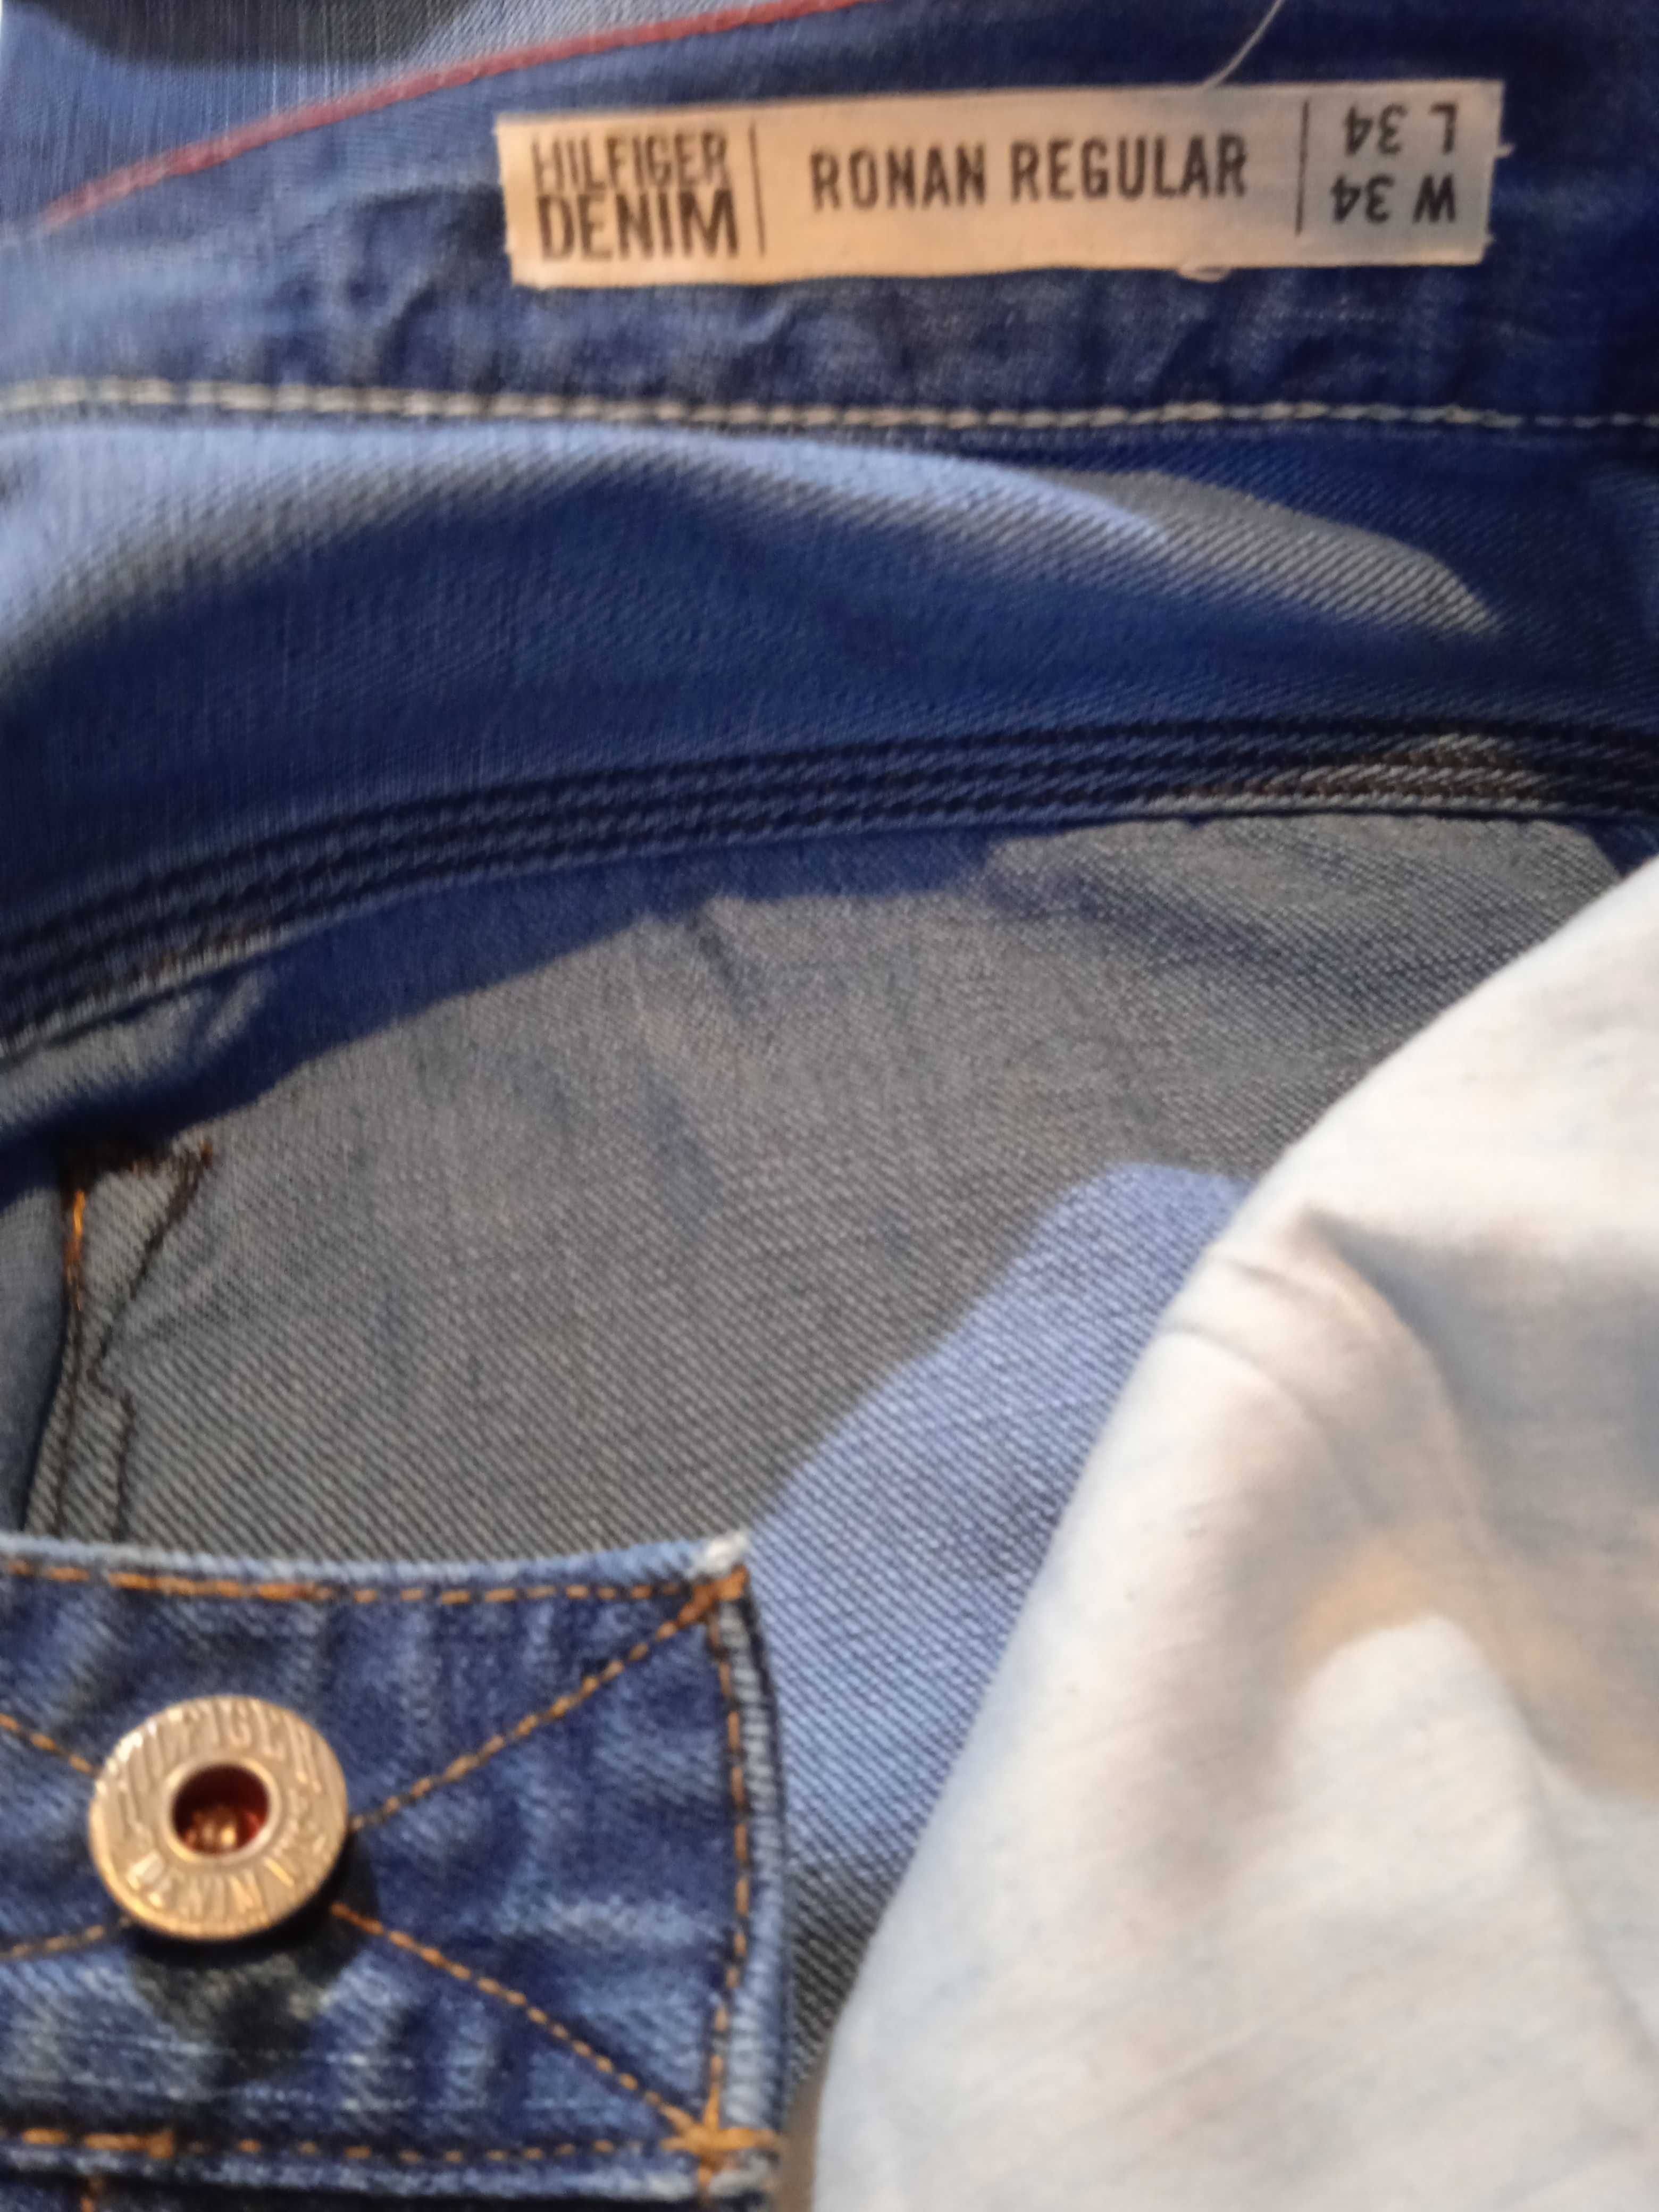 Hilfiger Tommy Jeans Ronan spodnie jeansy W34 L34 Super Cena! Zwrot!